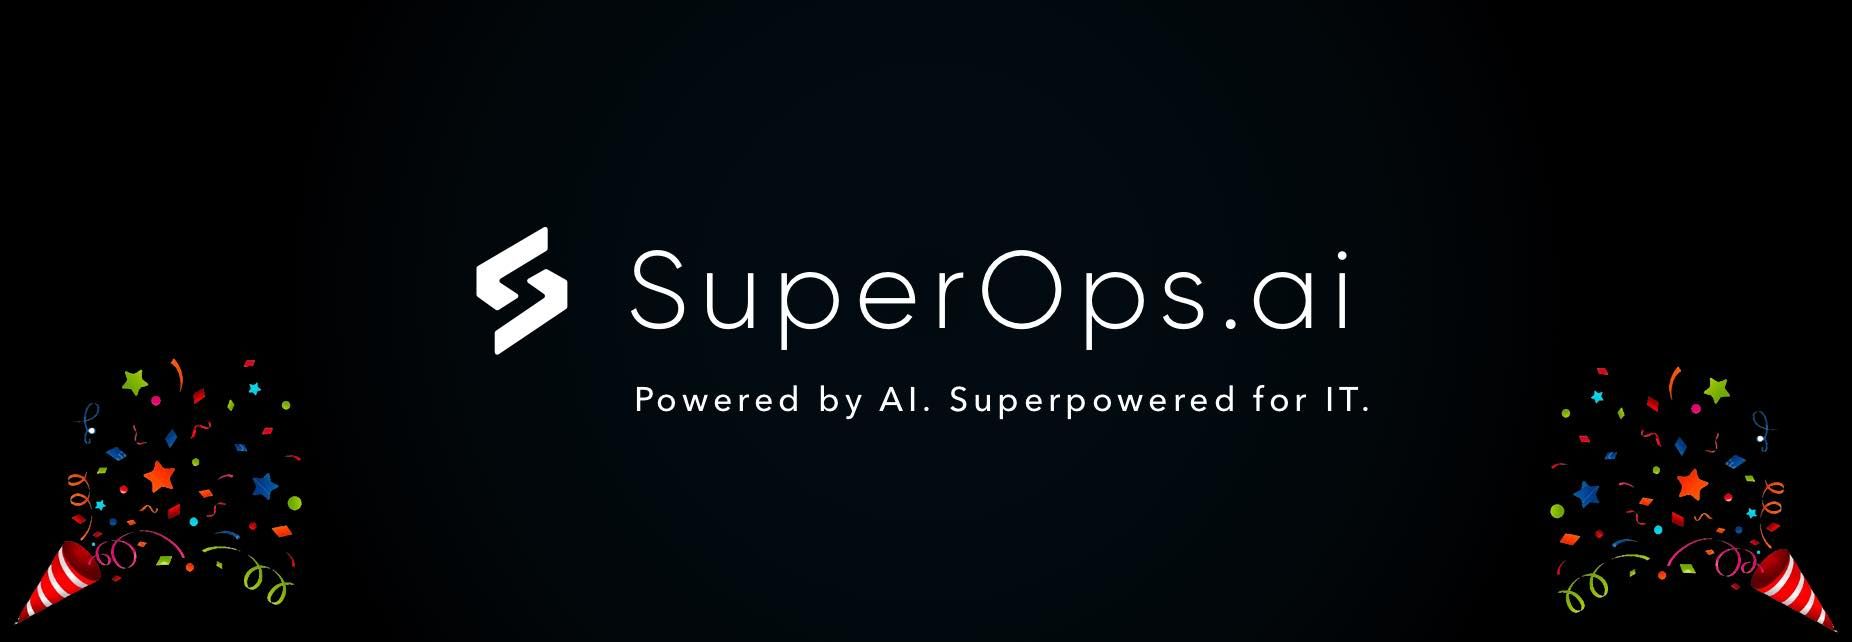 Introducing Superopsai.jpg